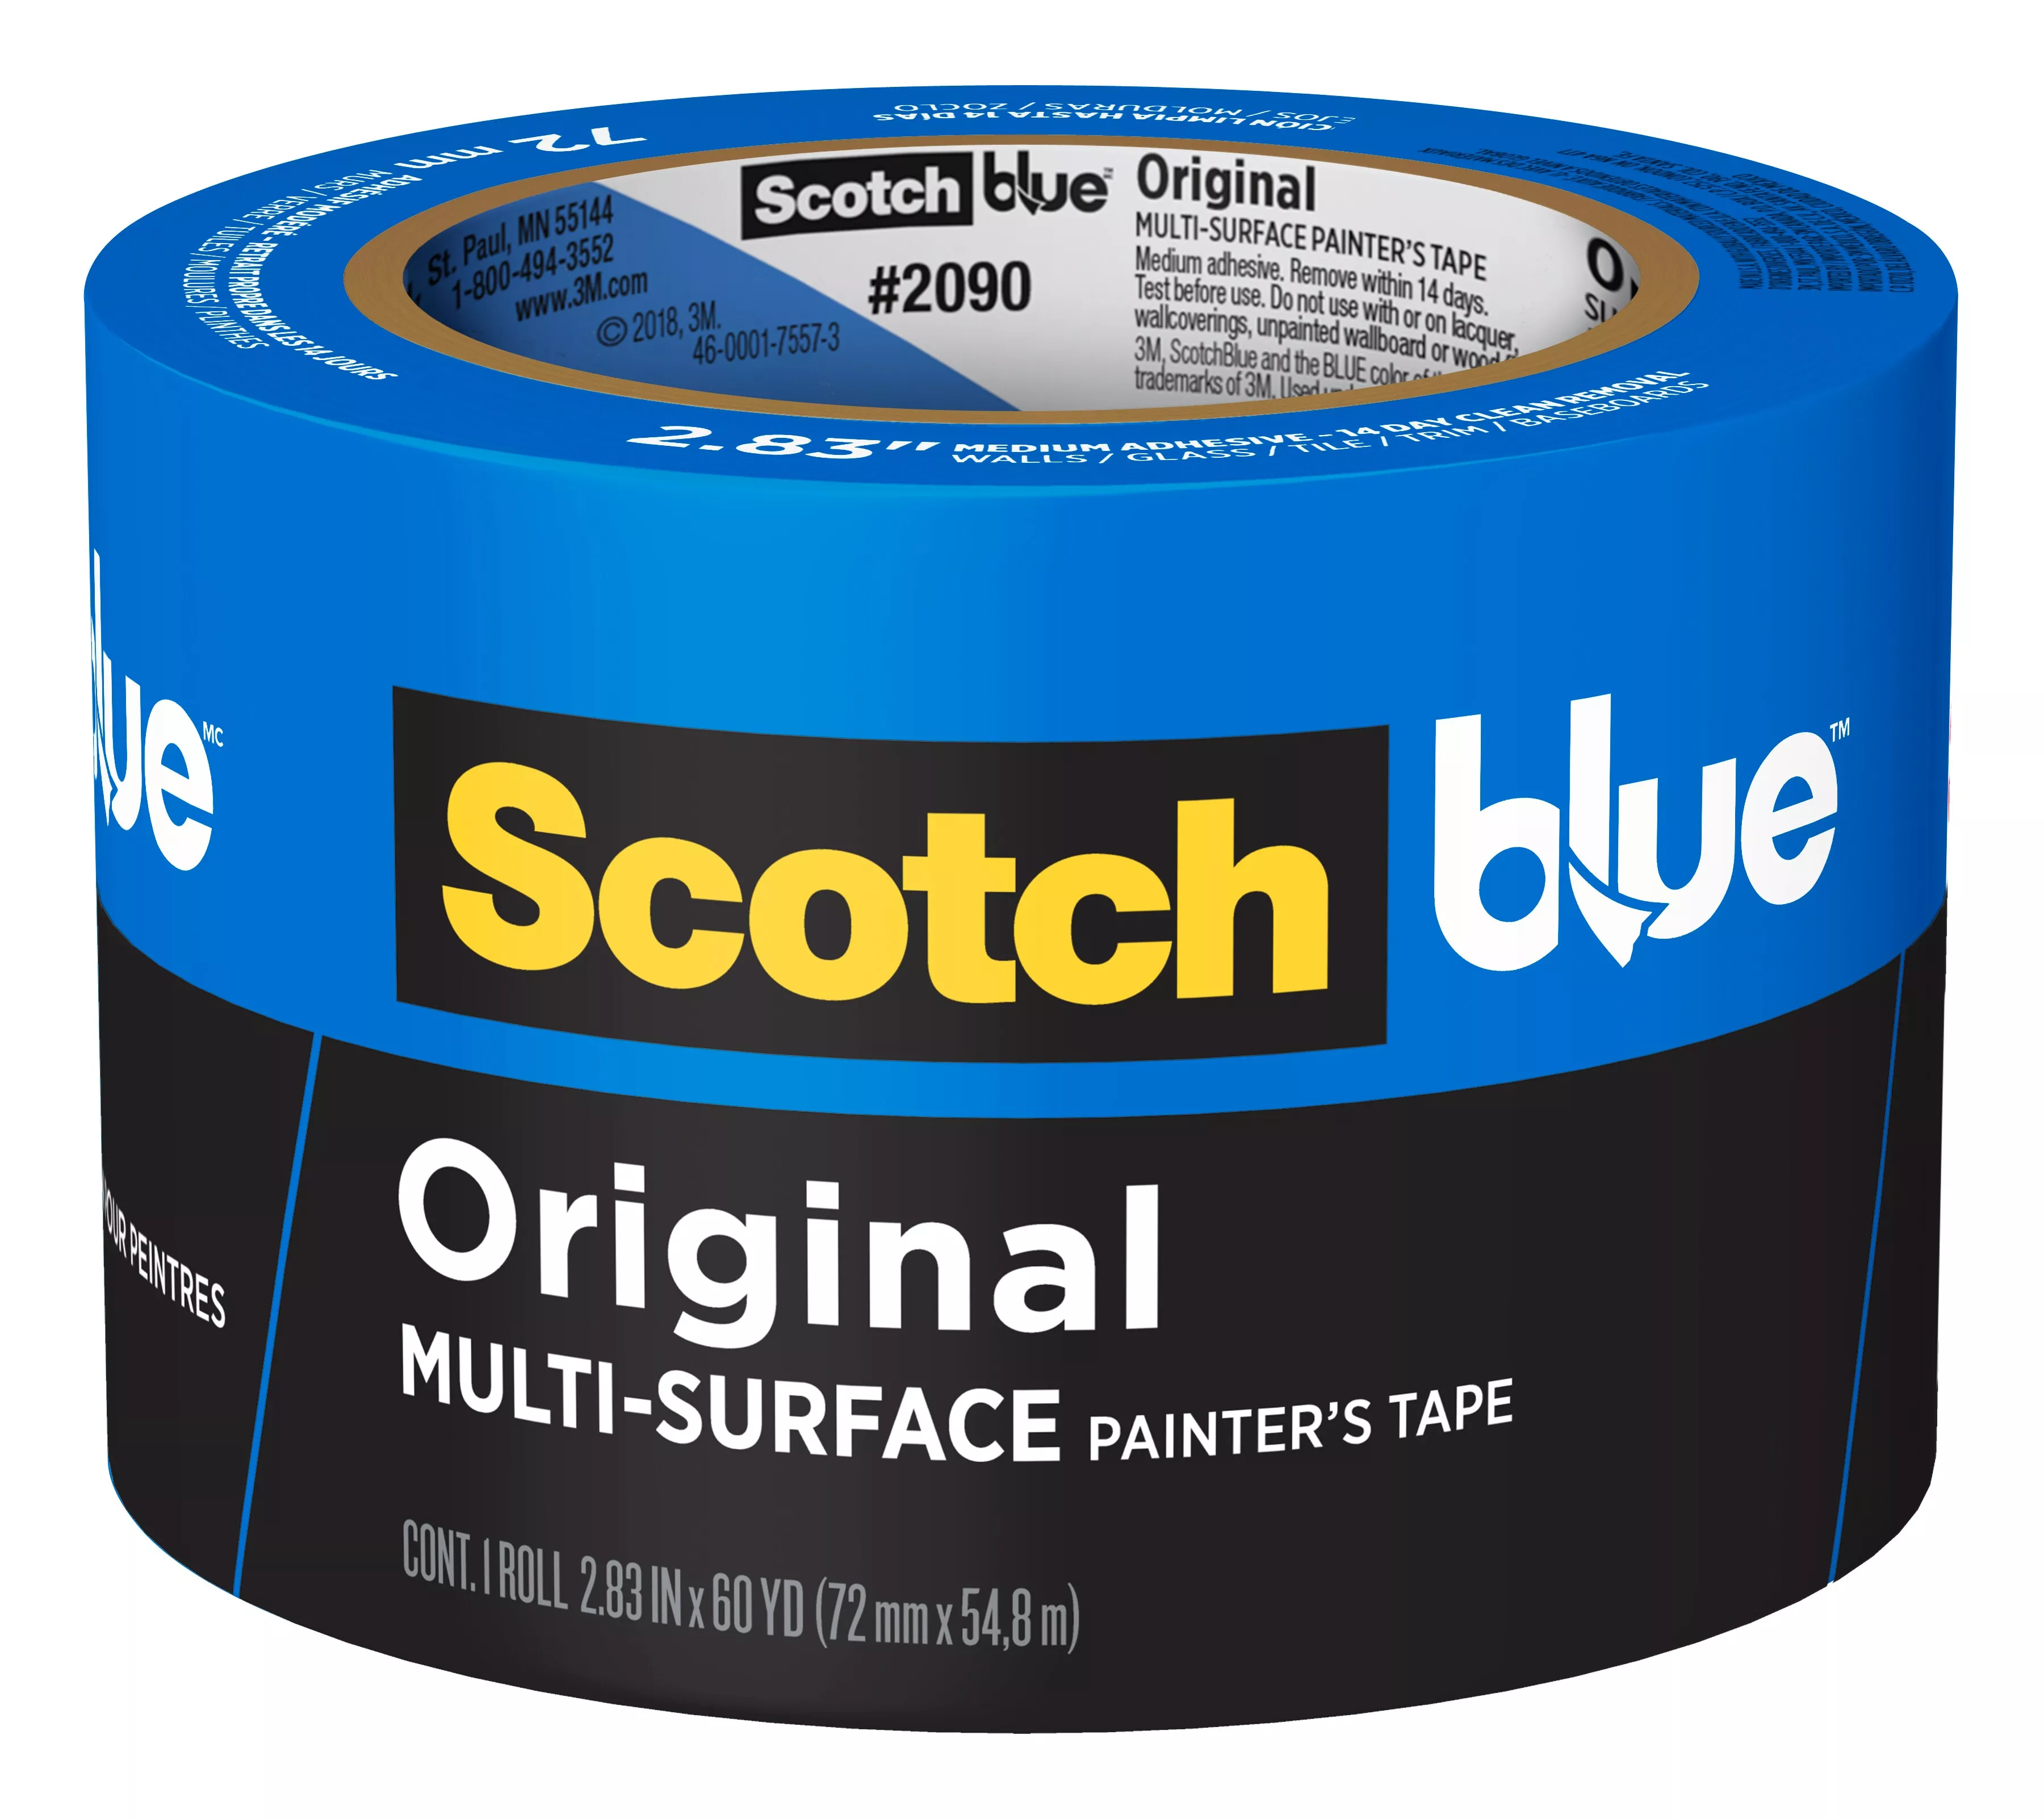 ScotchBlue™ Original Painter's Tape 2090-72NC, 2.83 in x 60 yd (72mm x 54,8m)